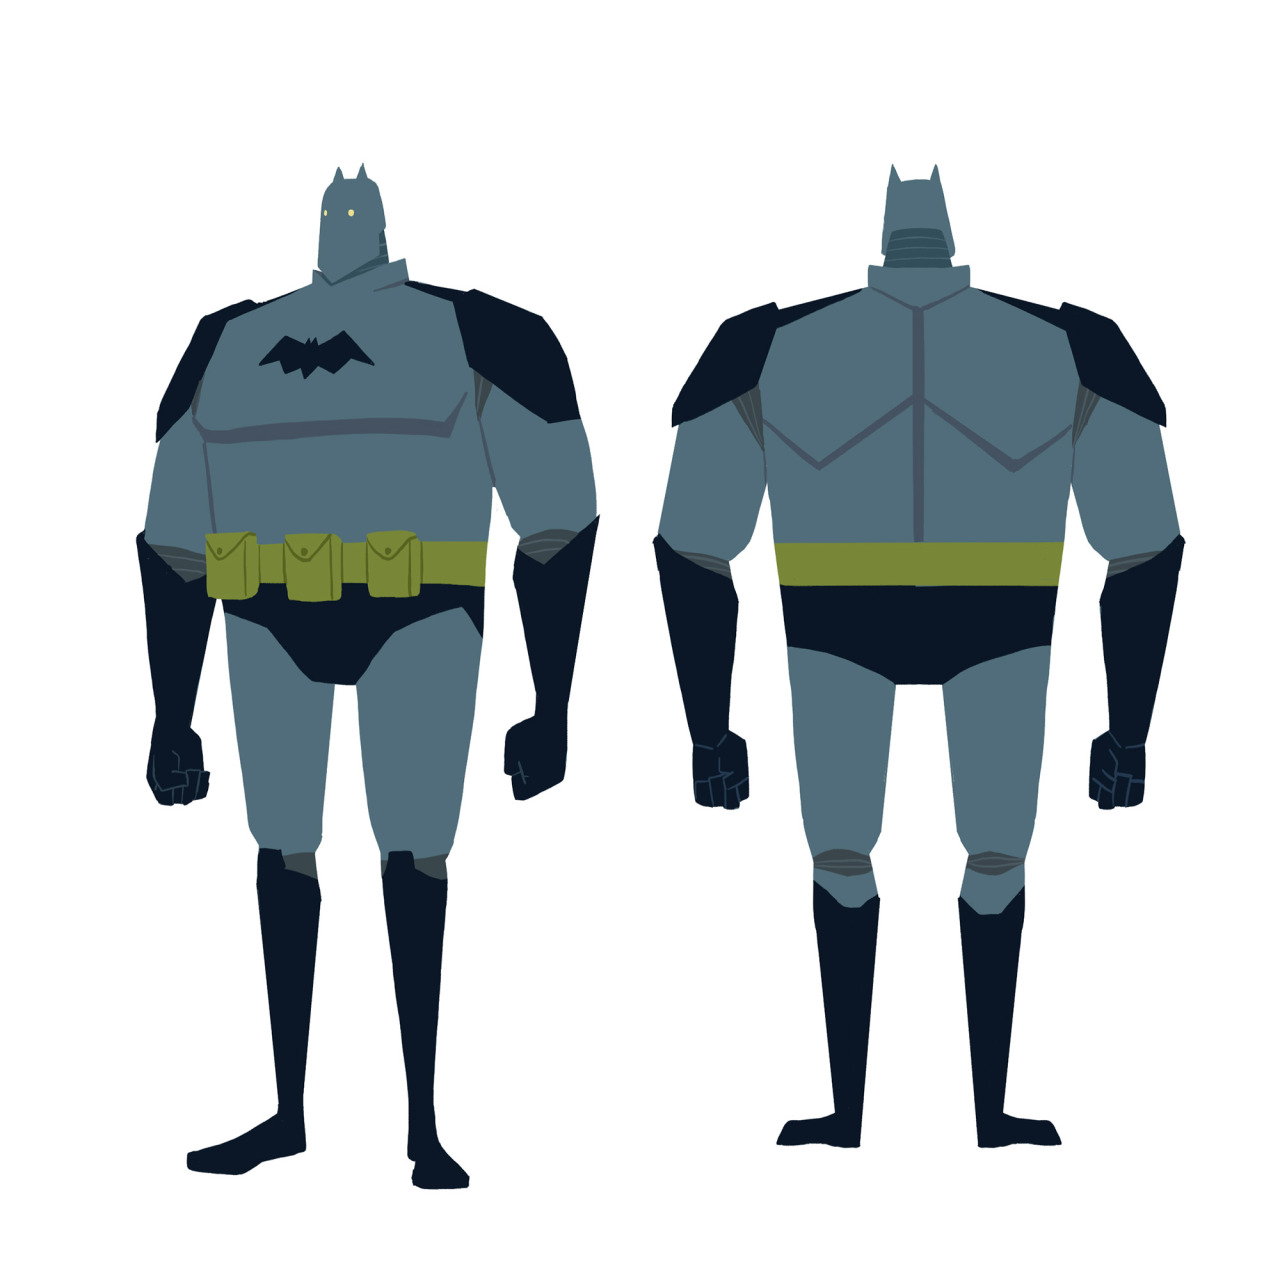 NICOLAS RIX — Batman character design and turnaround